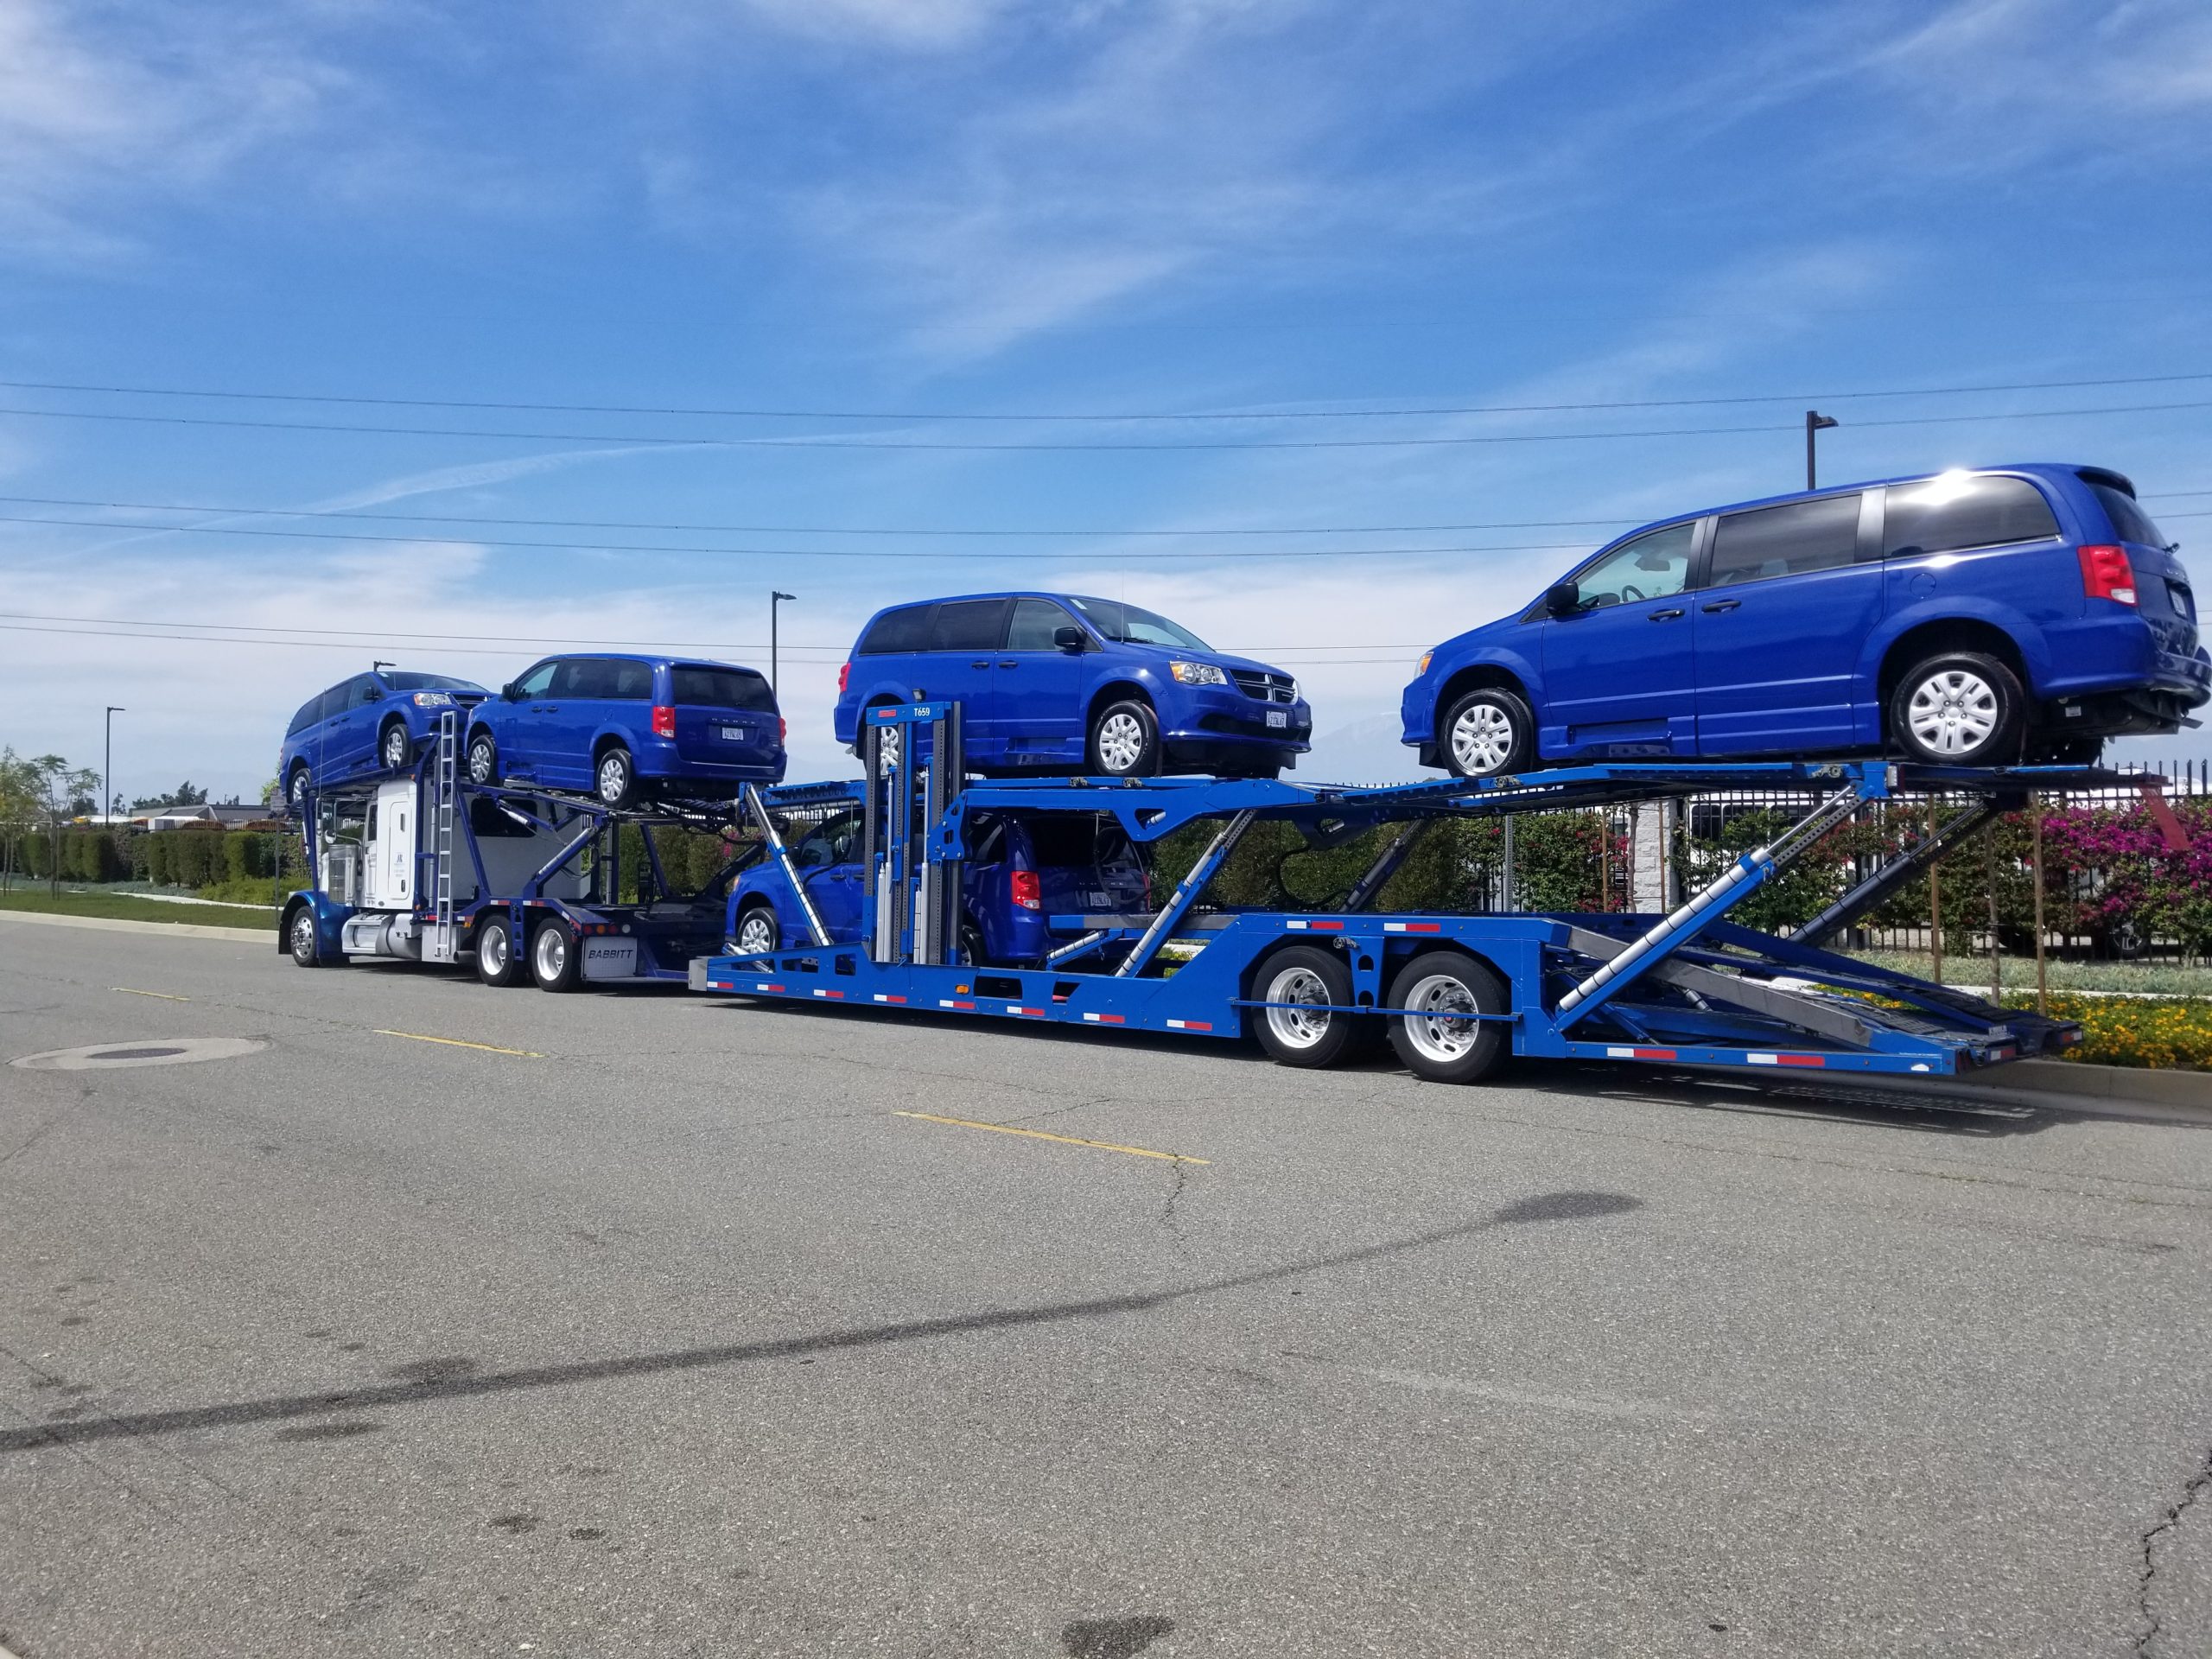 Four blue mobility vans on auto transport trailers on concrete road